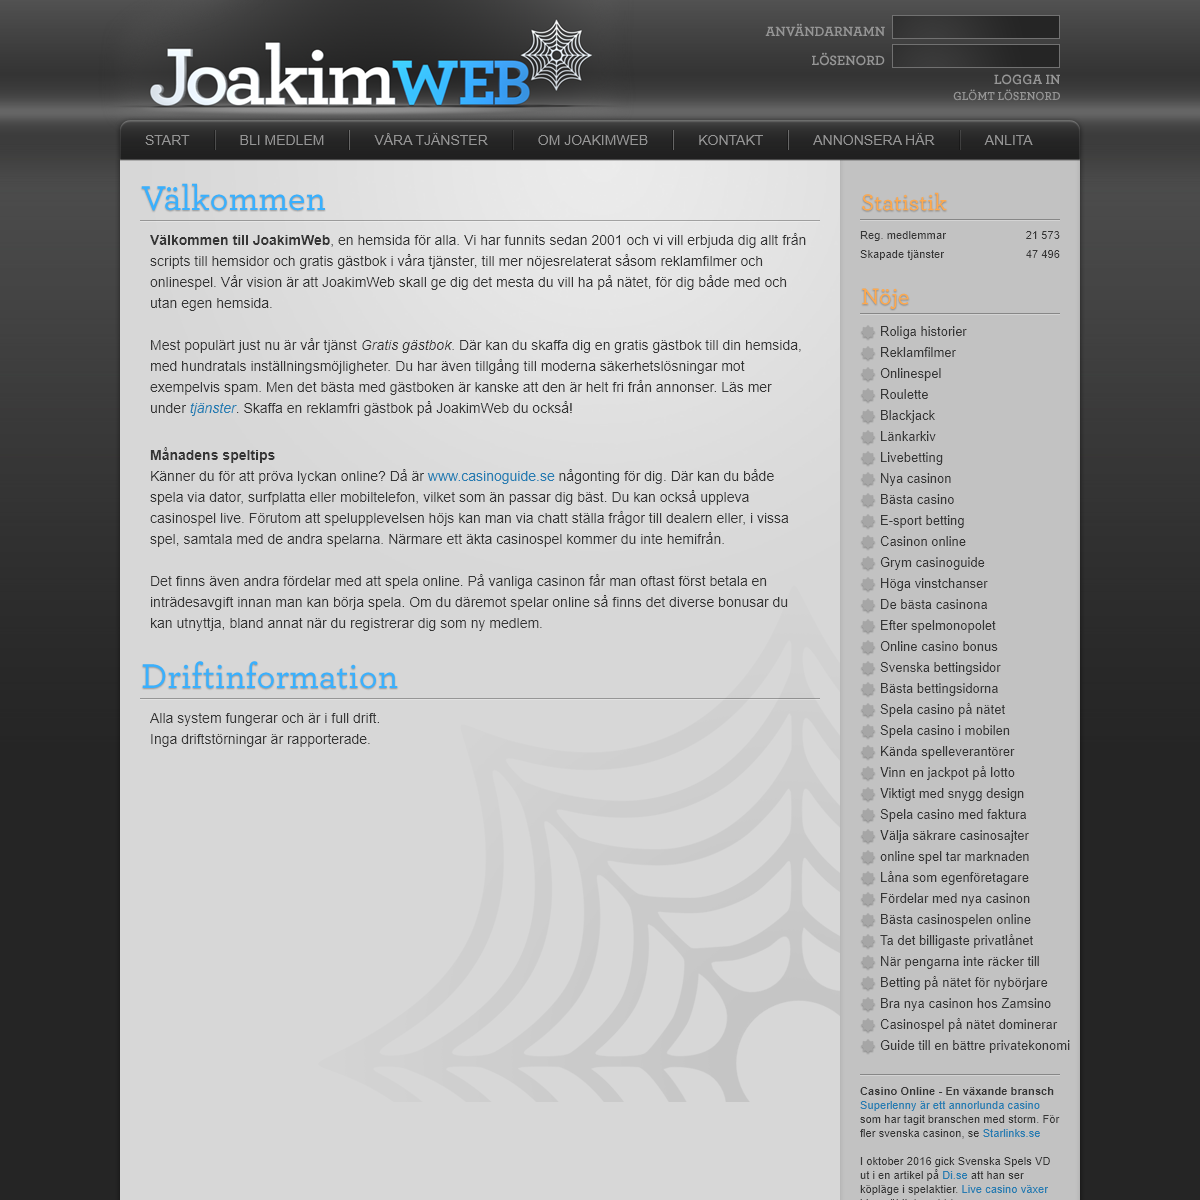 A complete backup of joakimweb.se